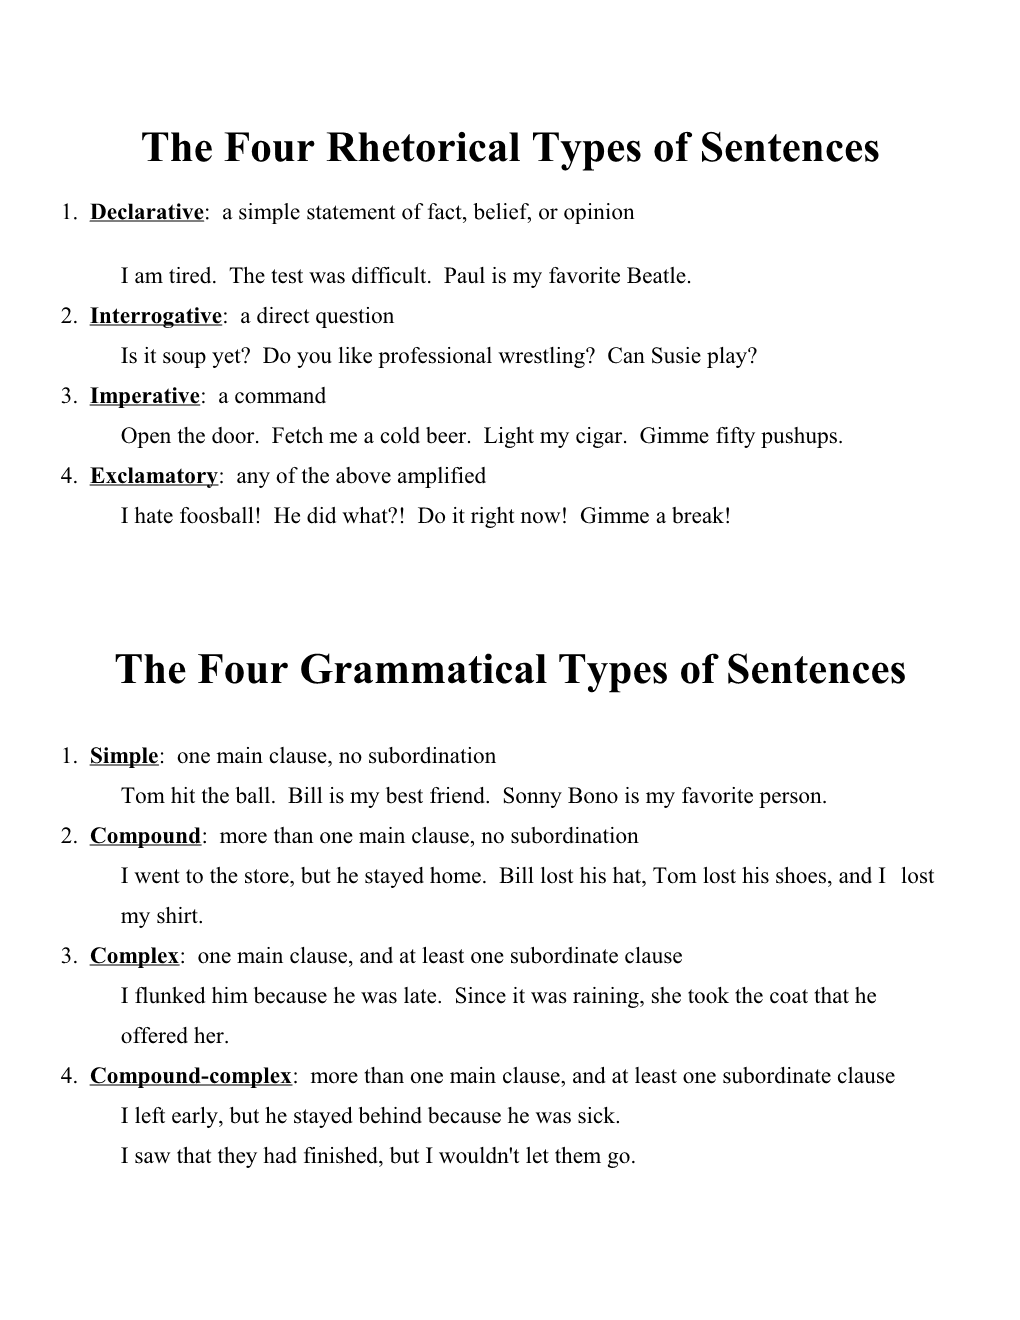 The Four Rhetorical Types of Sentences